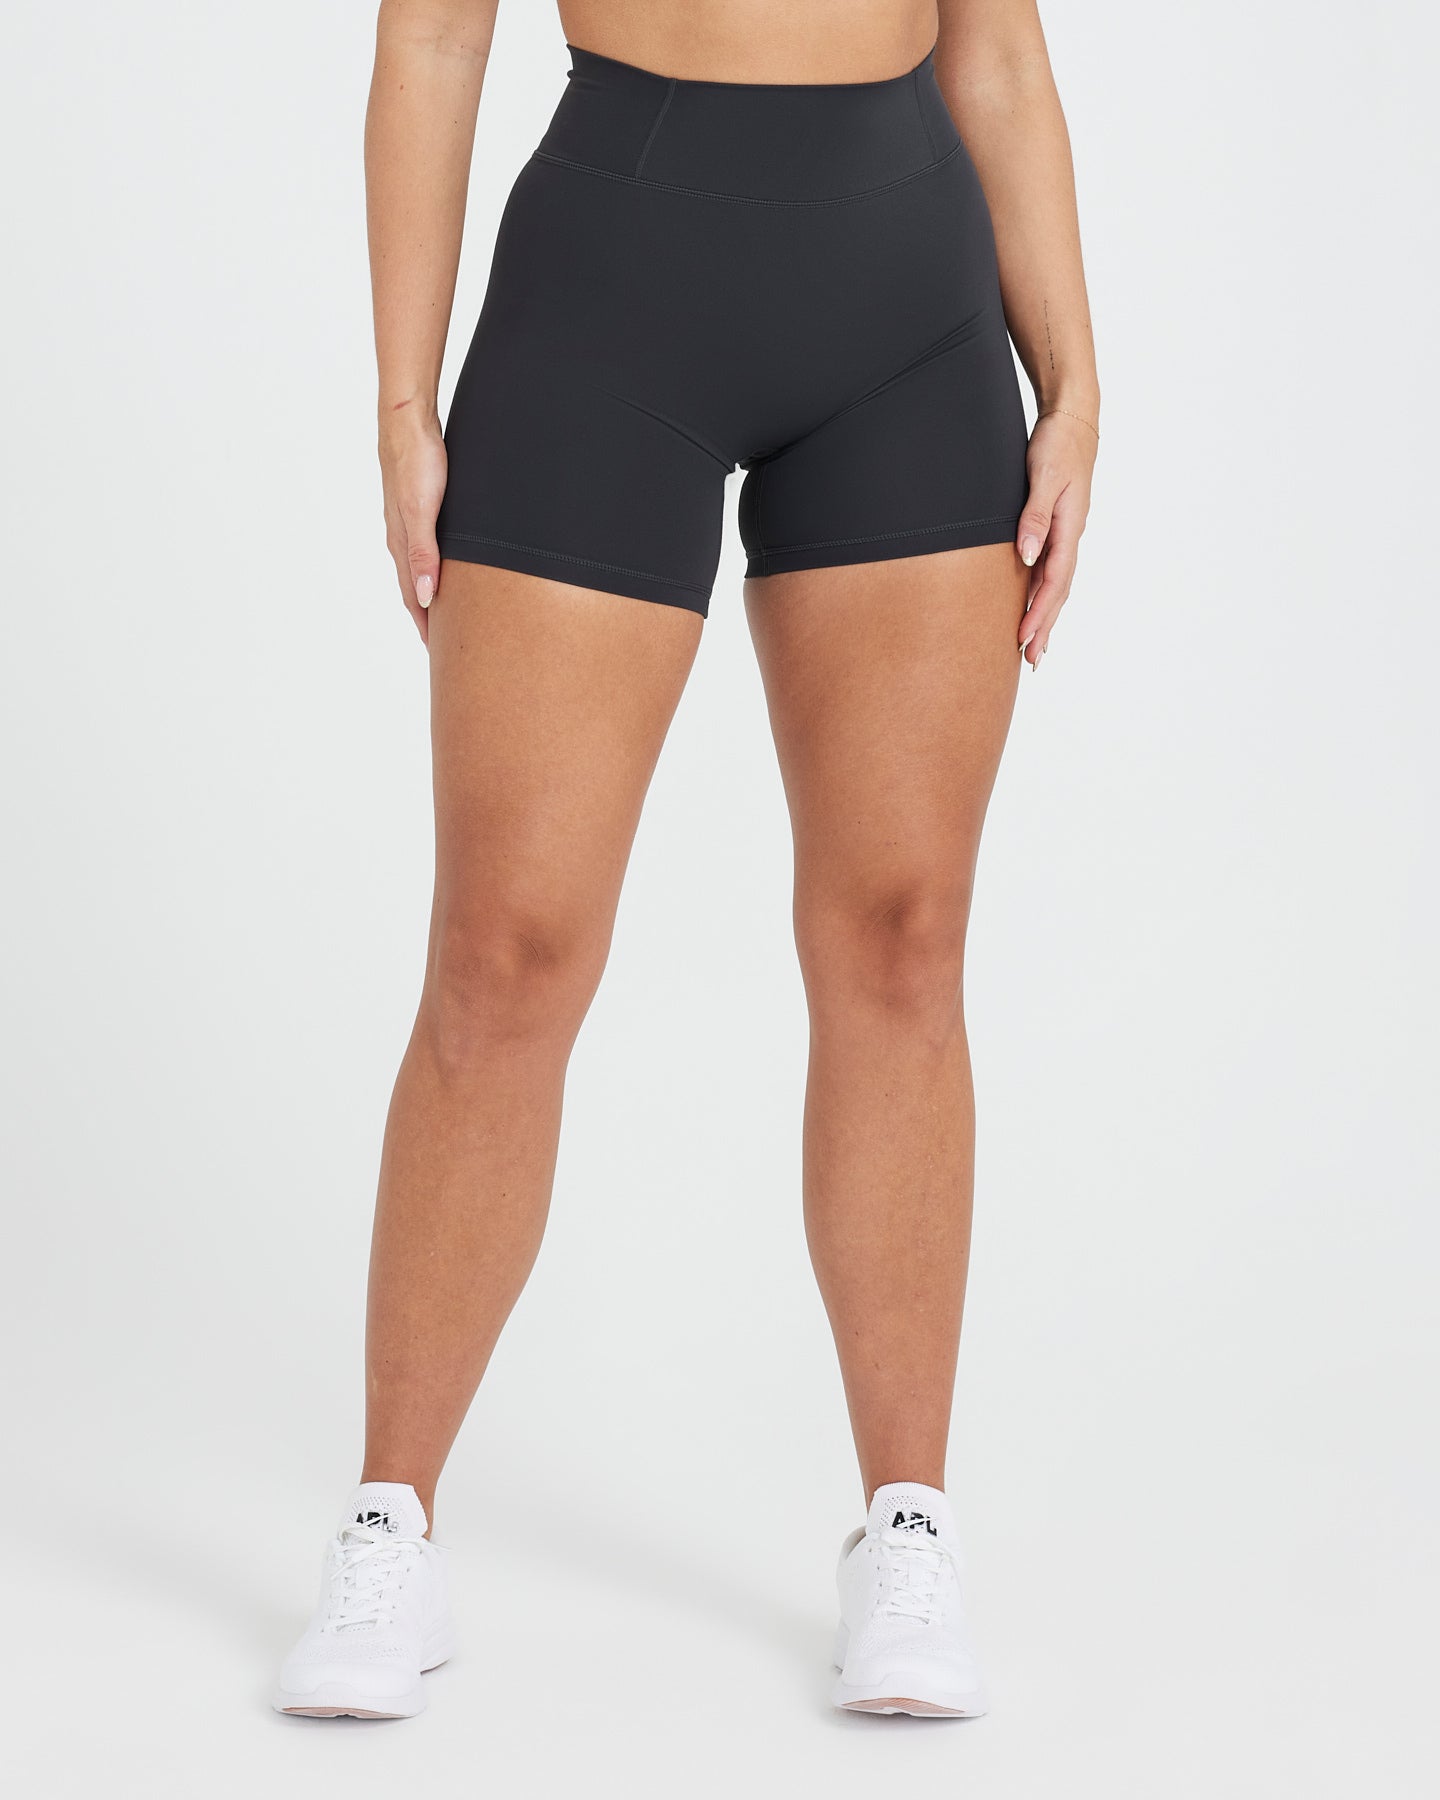 Grey Sport Shorts for Women - Mid Waist - Coal | Oner Active US